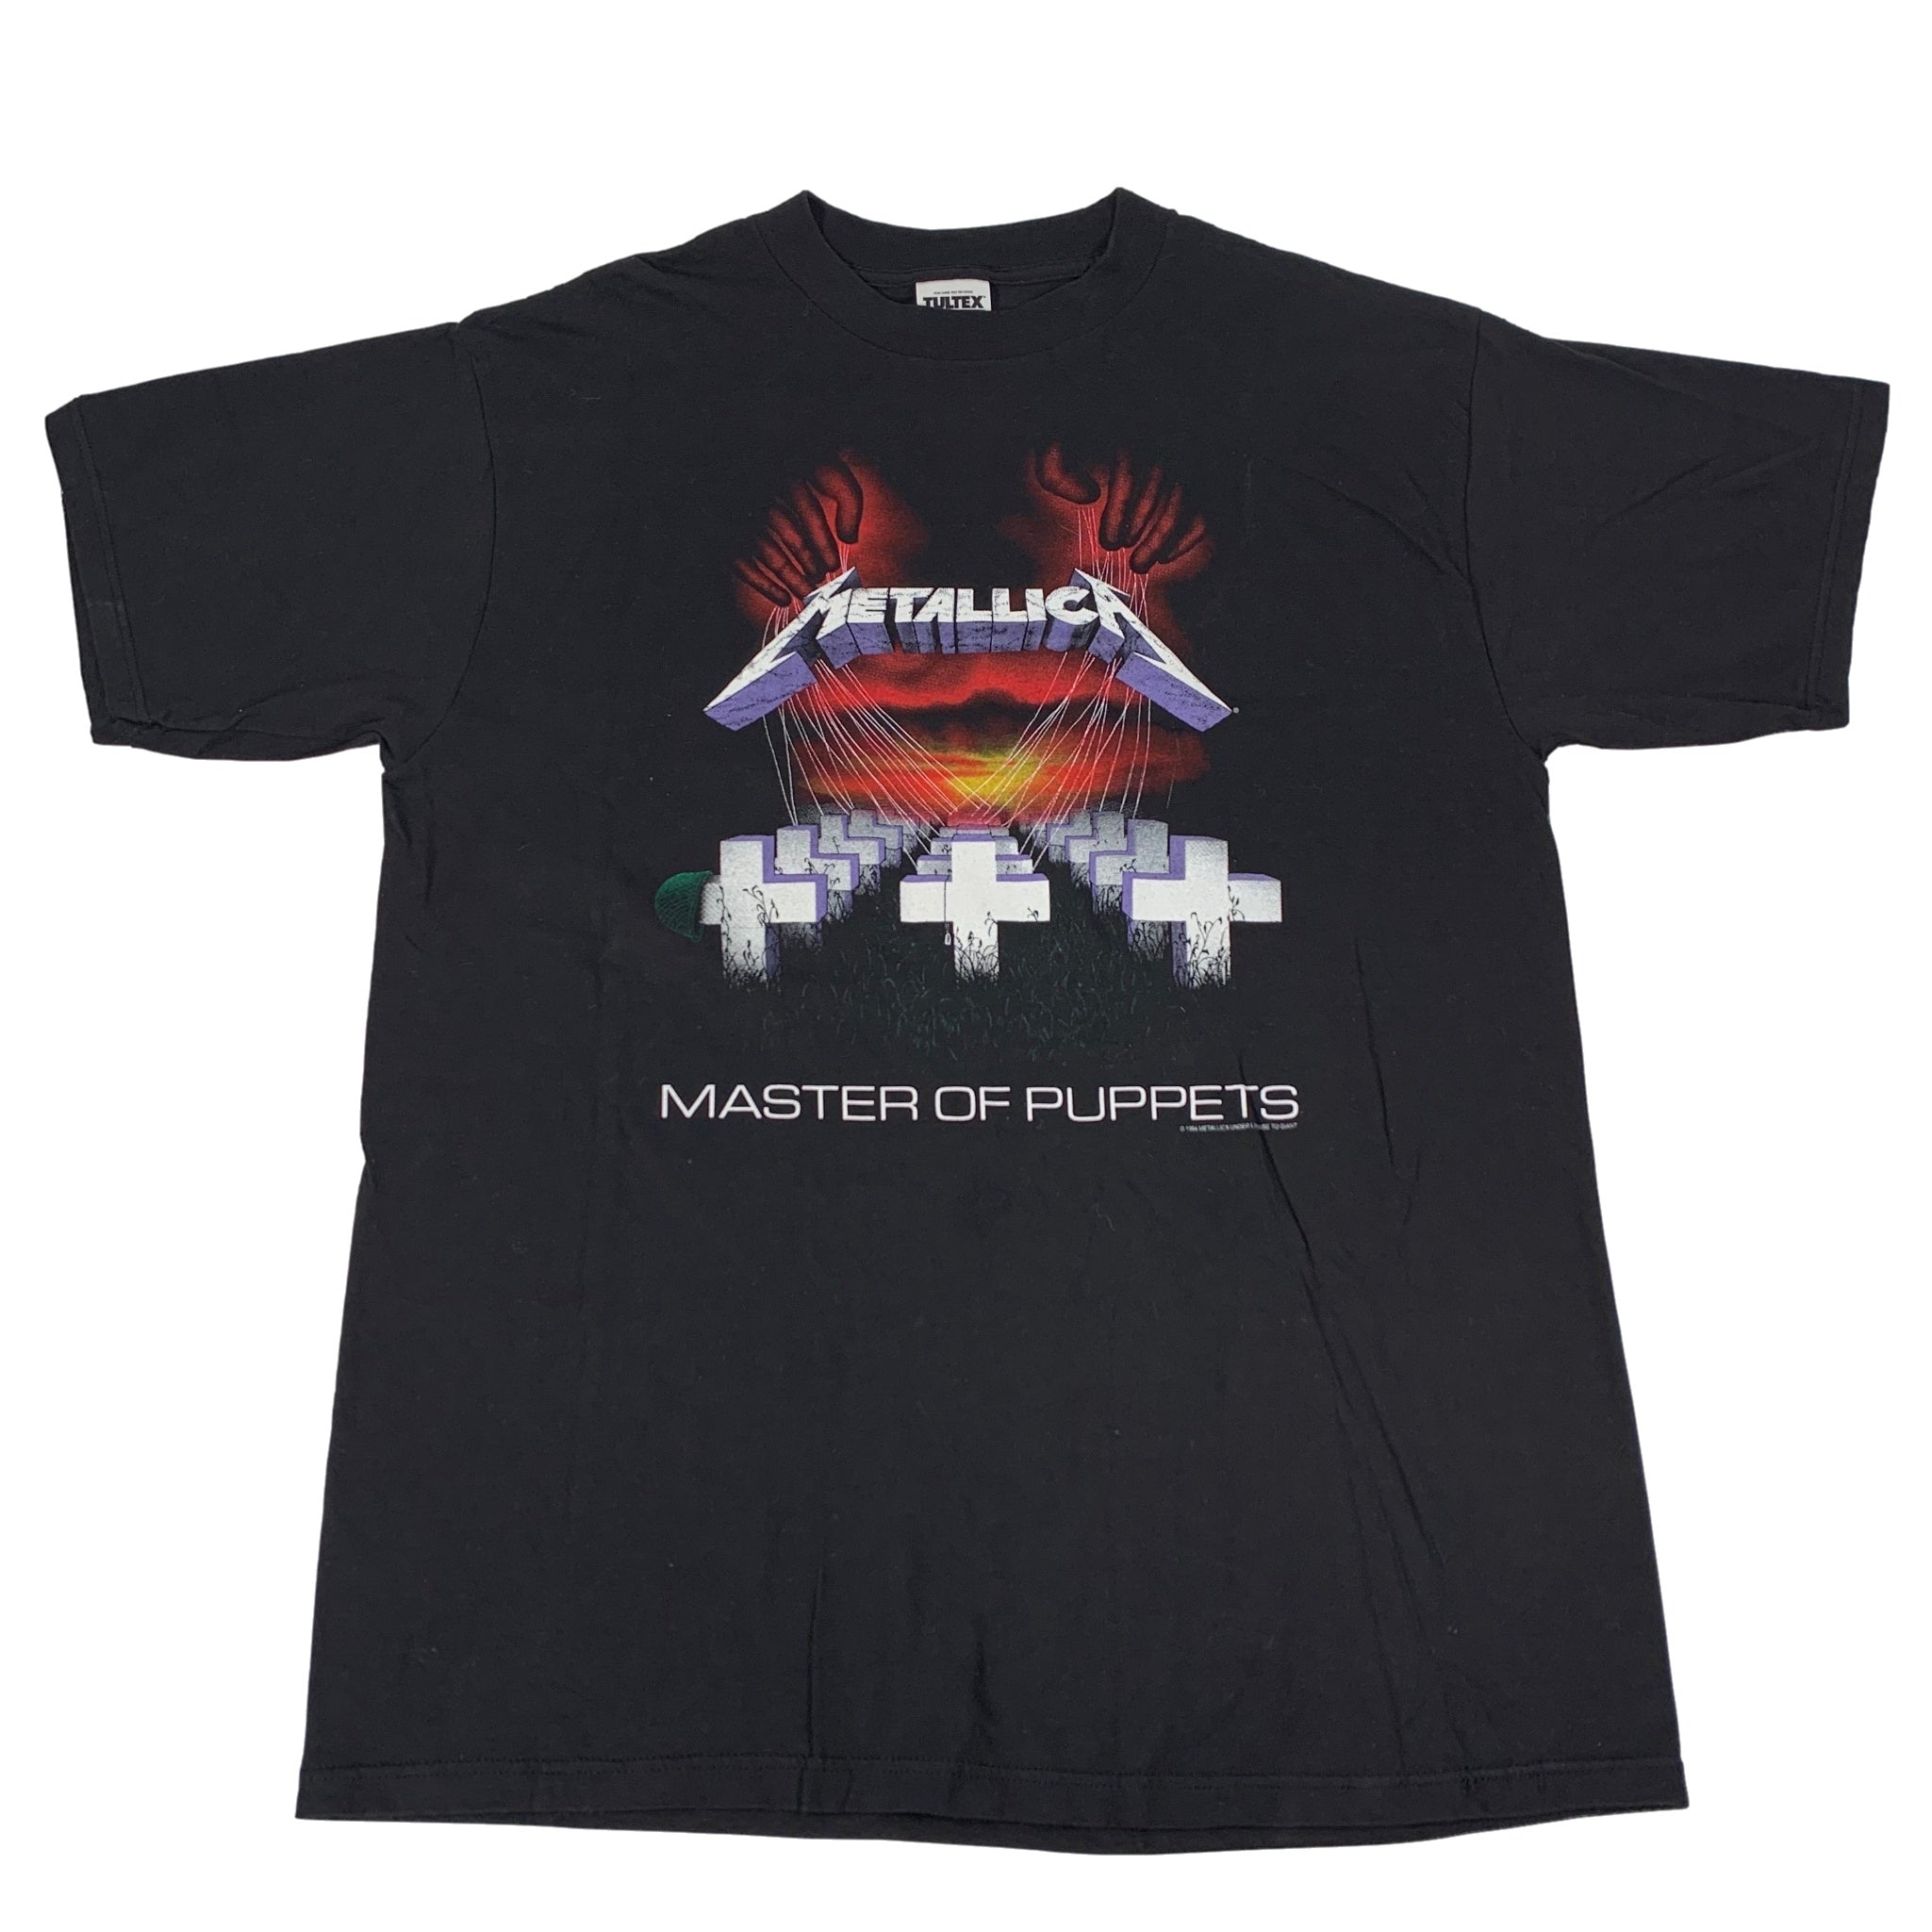 Vintage Metallica "Master Of Puppets" T-Shirt